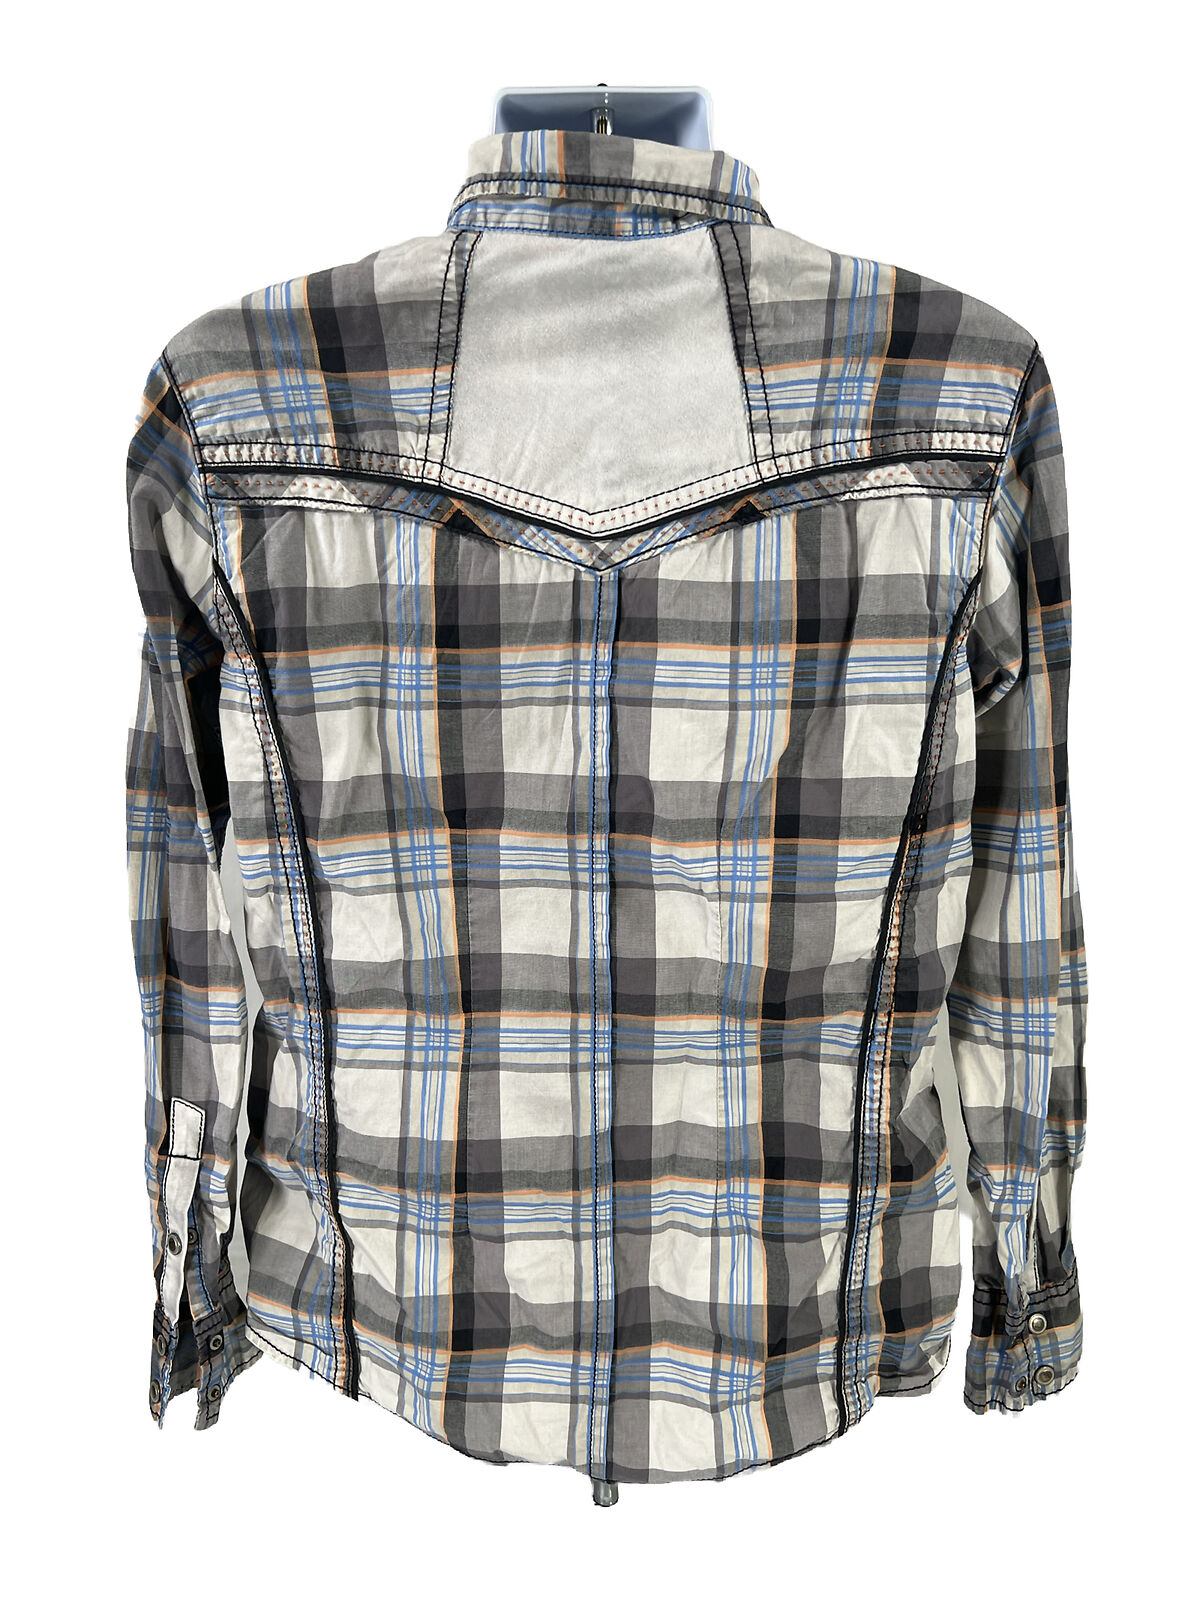 Camisa informal ajustada de manga larga a cuadros gris con hebilla negra para hombre - M